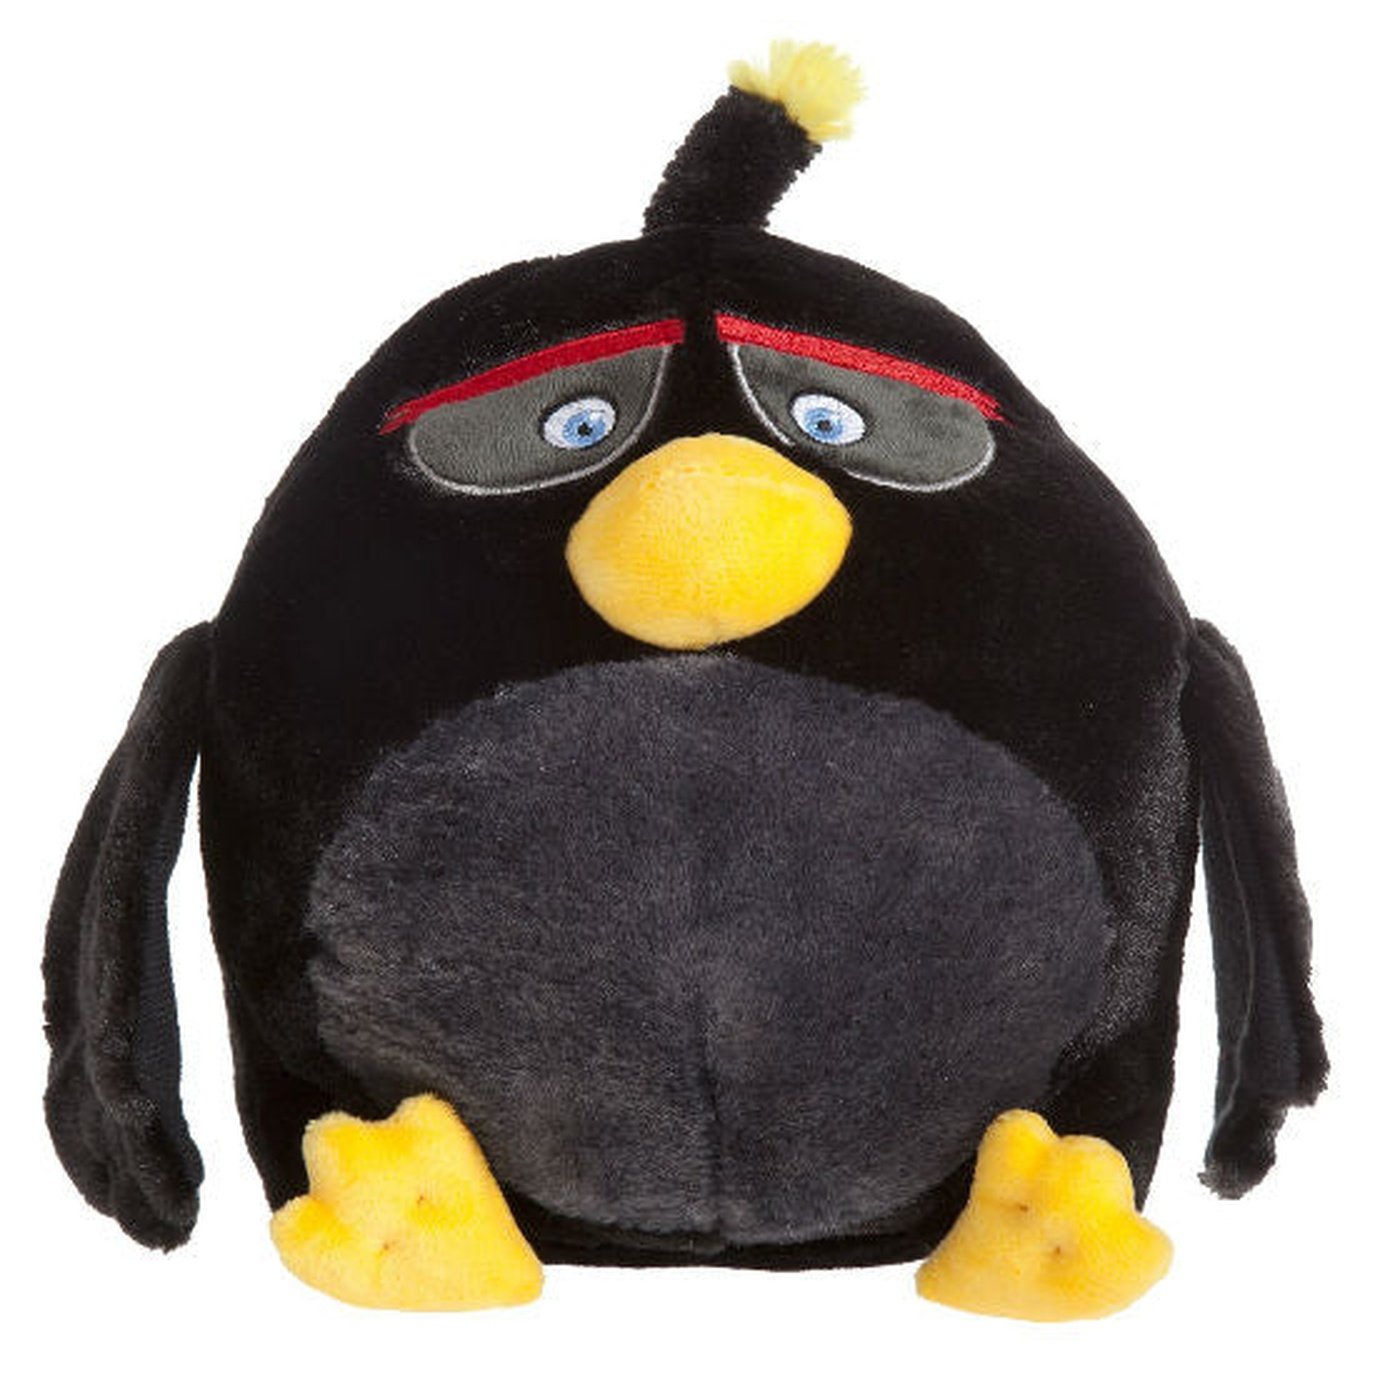 Peluche Riscaldabile Angry Birds "Bomb" INN-312 Innoliving